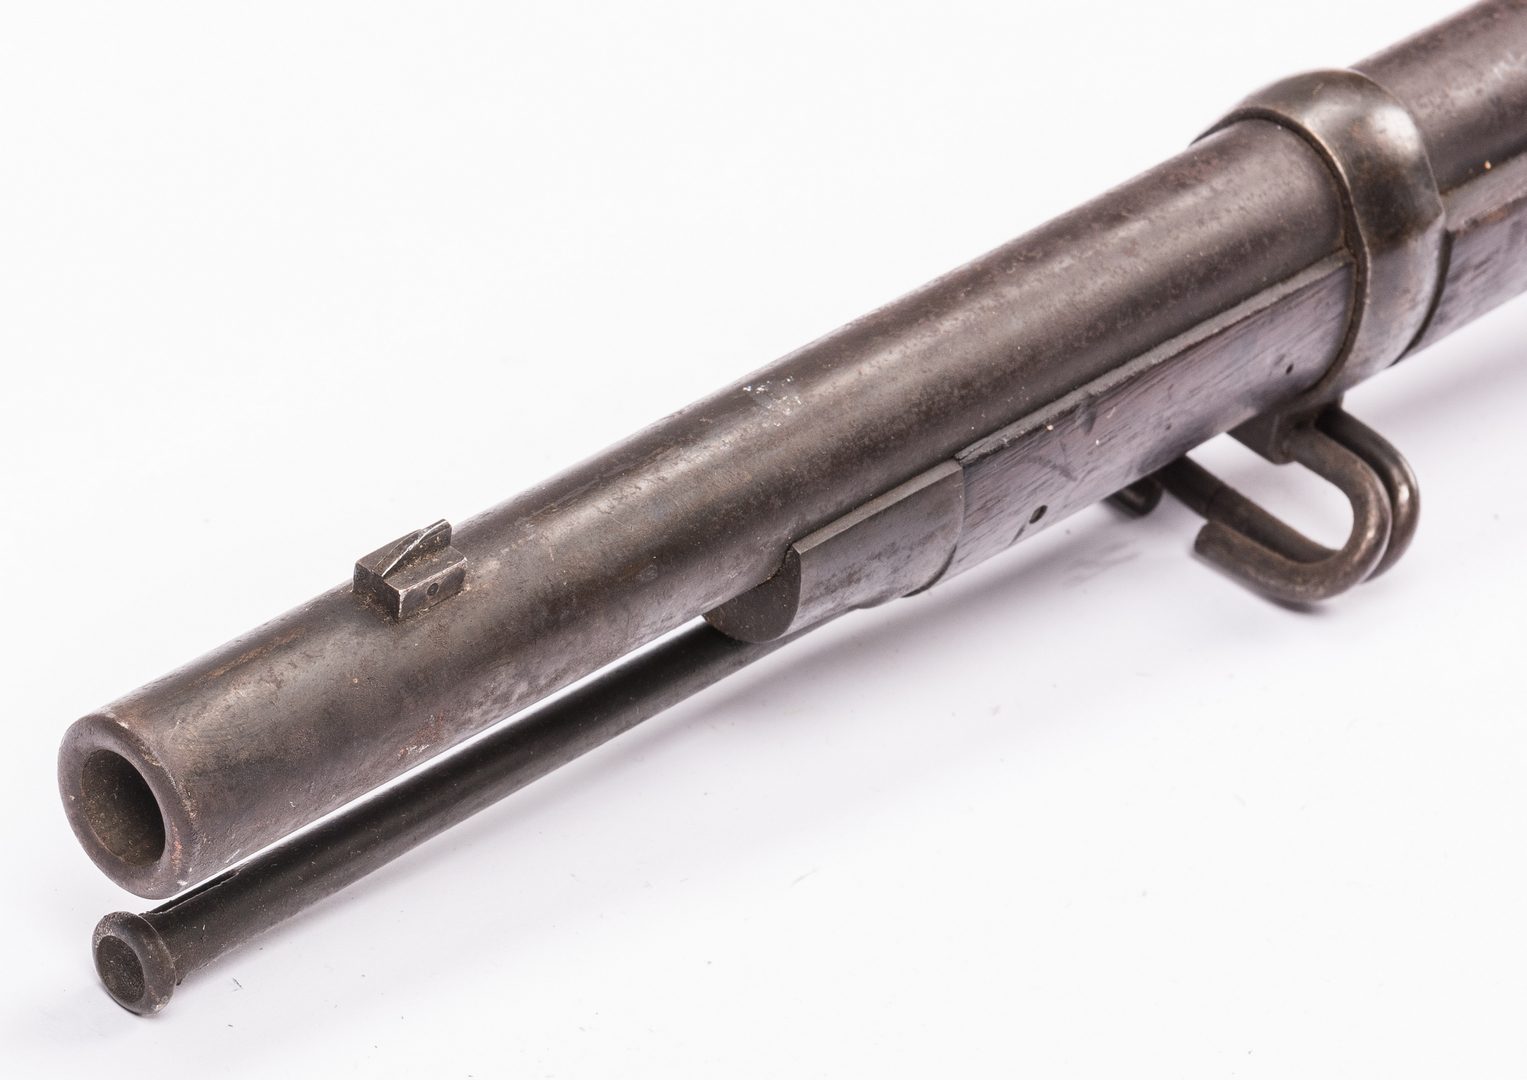 Lot 794: Springfield Model 1873 rifle, bayonet, & holster, 3 items